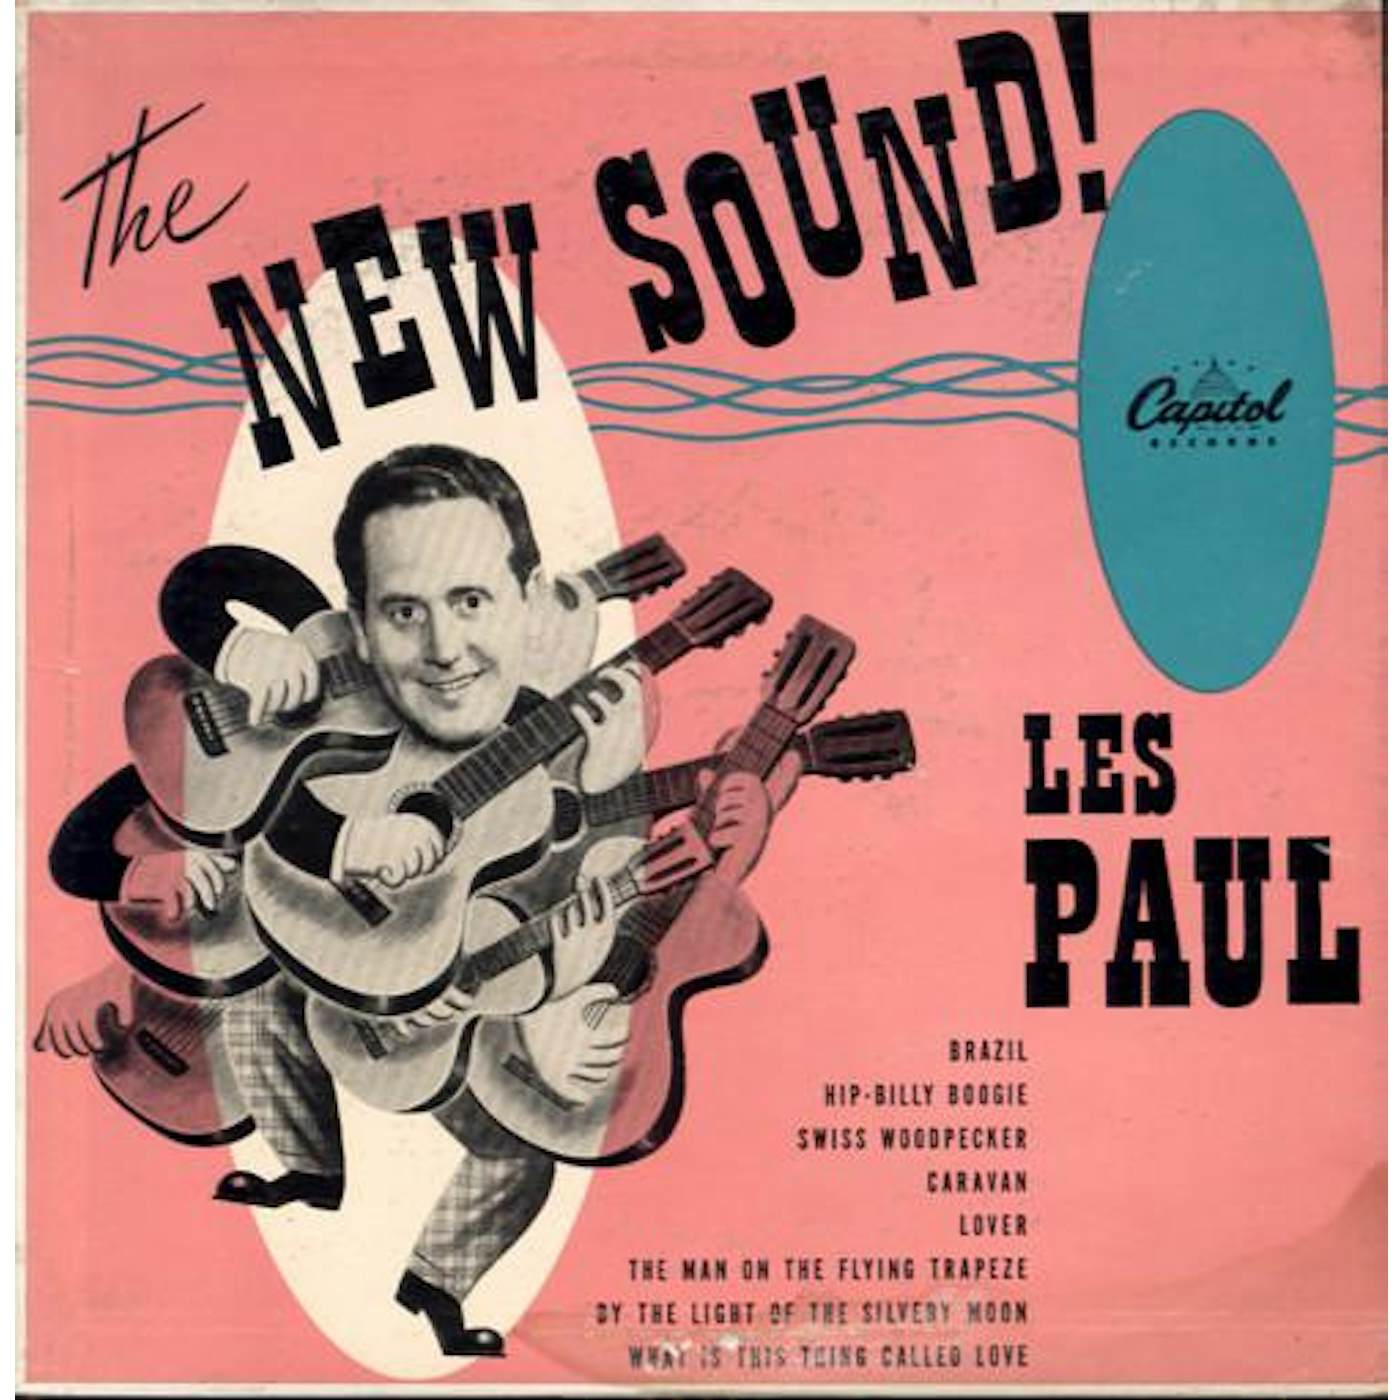 Les Paul NEW SOUND Vinyl Record